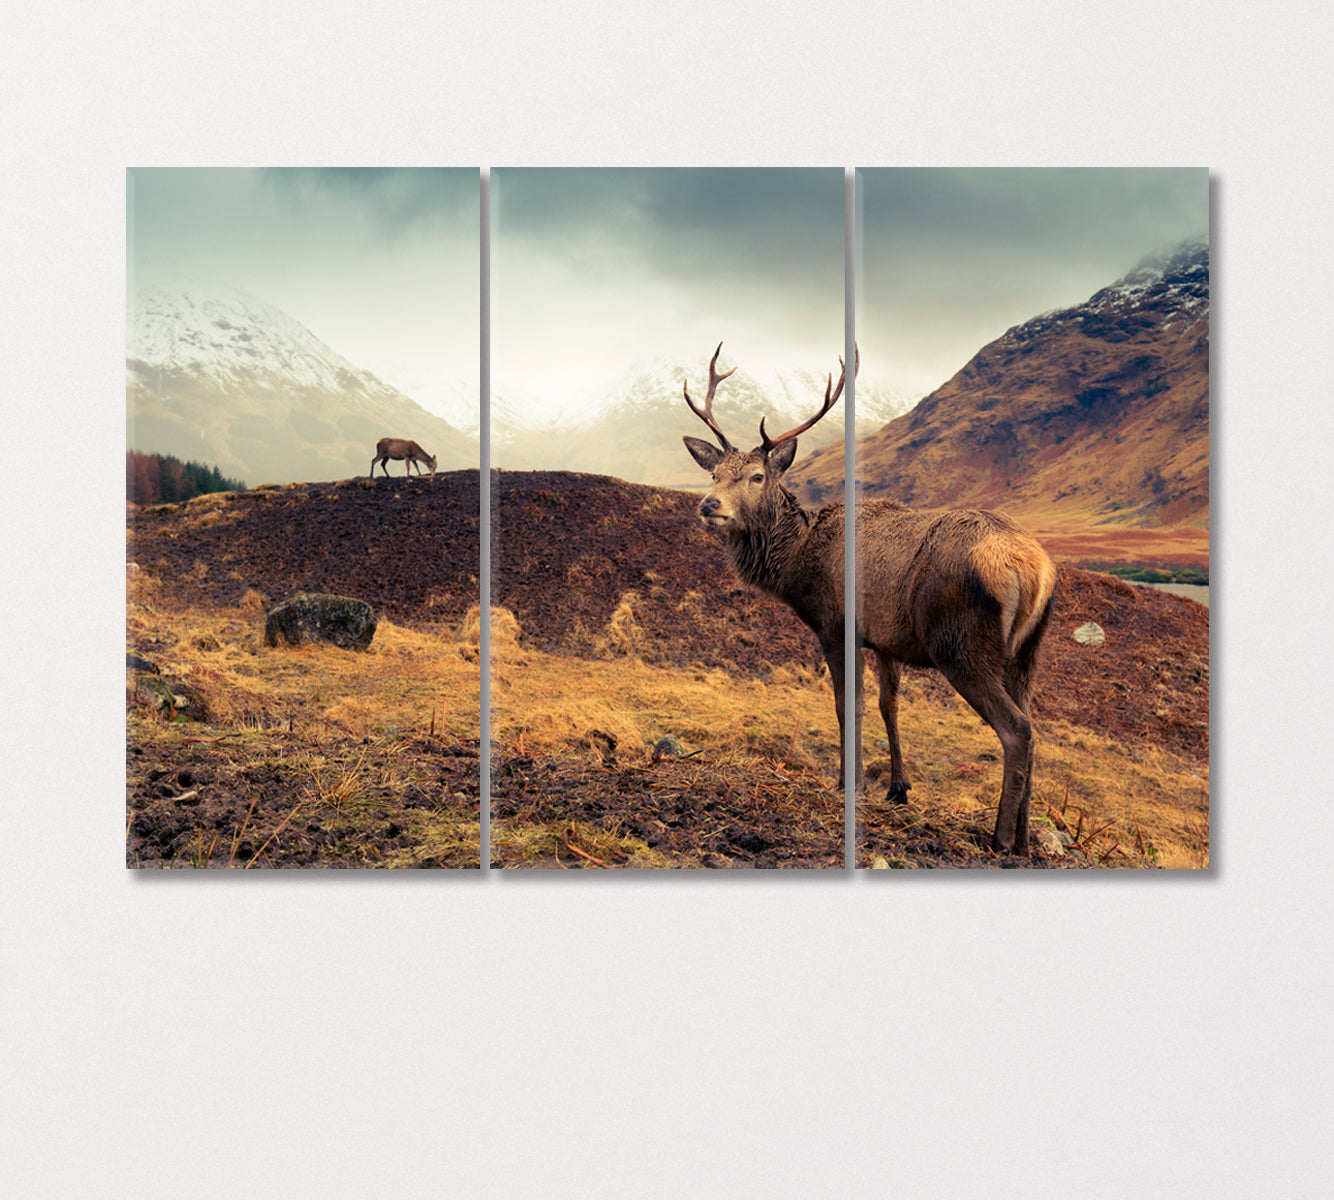 Scottish Mountain Landscape with Deer Canvas Print-Canvas Print-CetArt-3 Panels-36x24 inches-CetArt